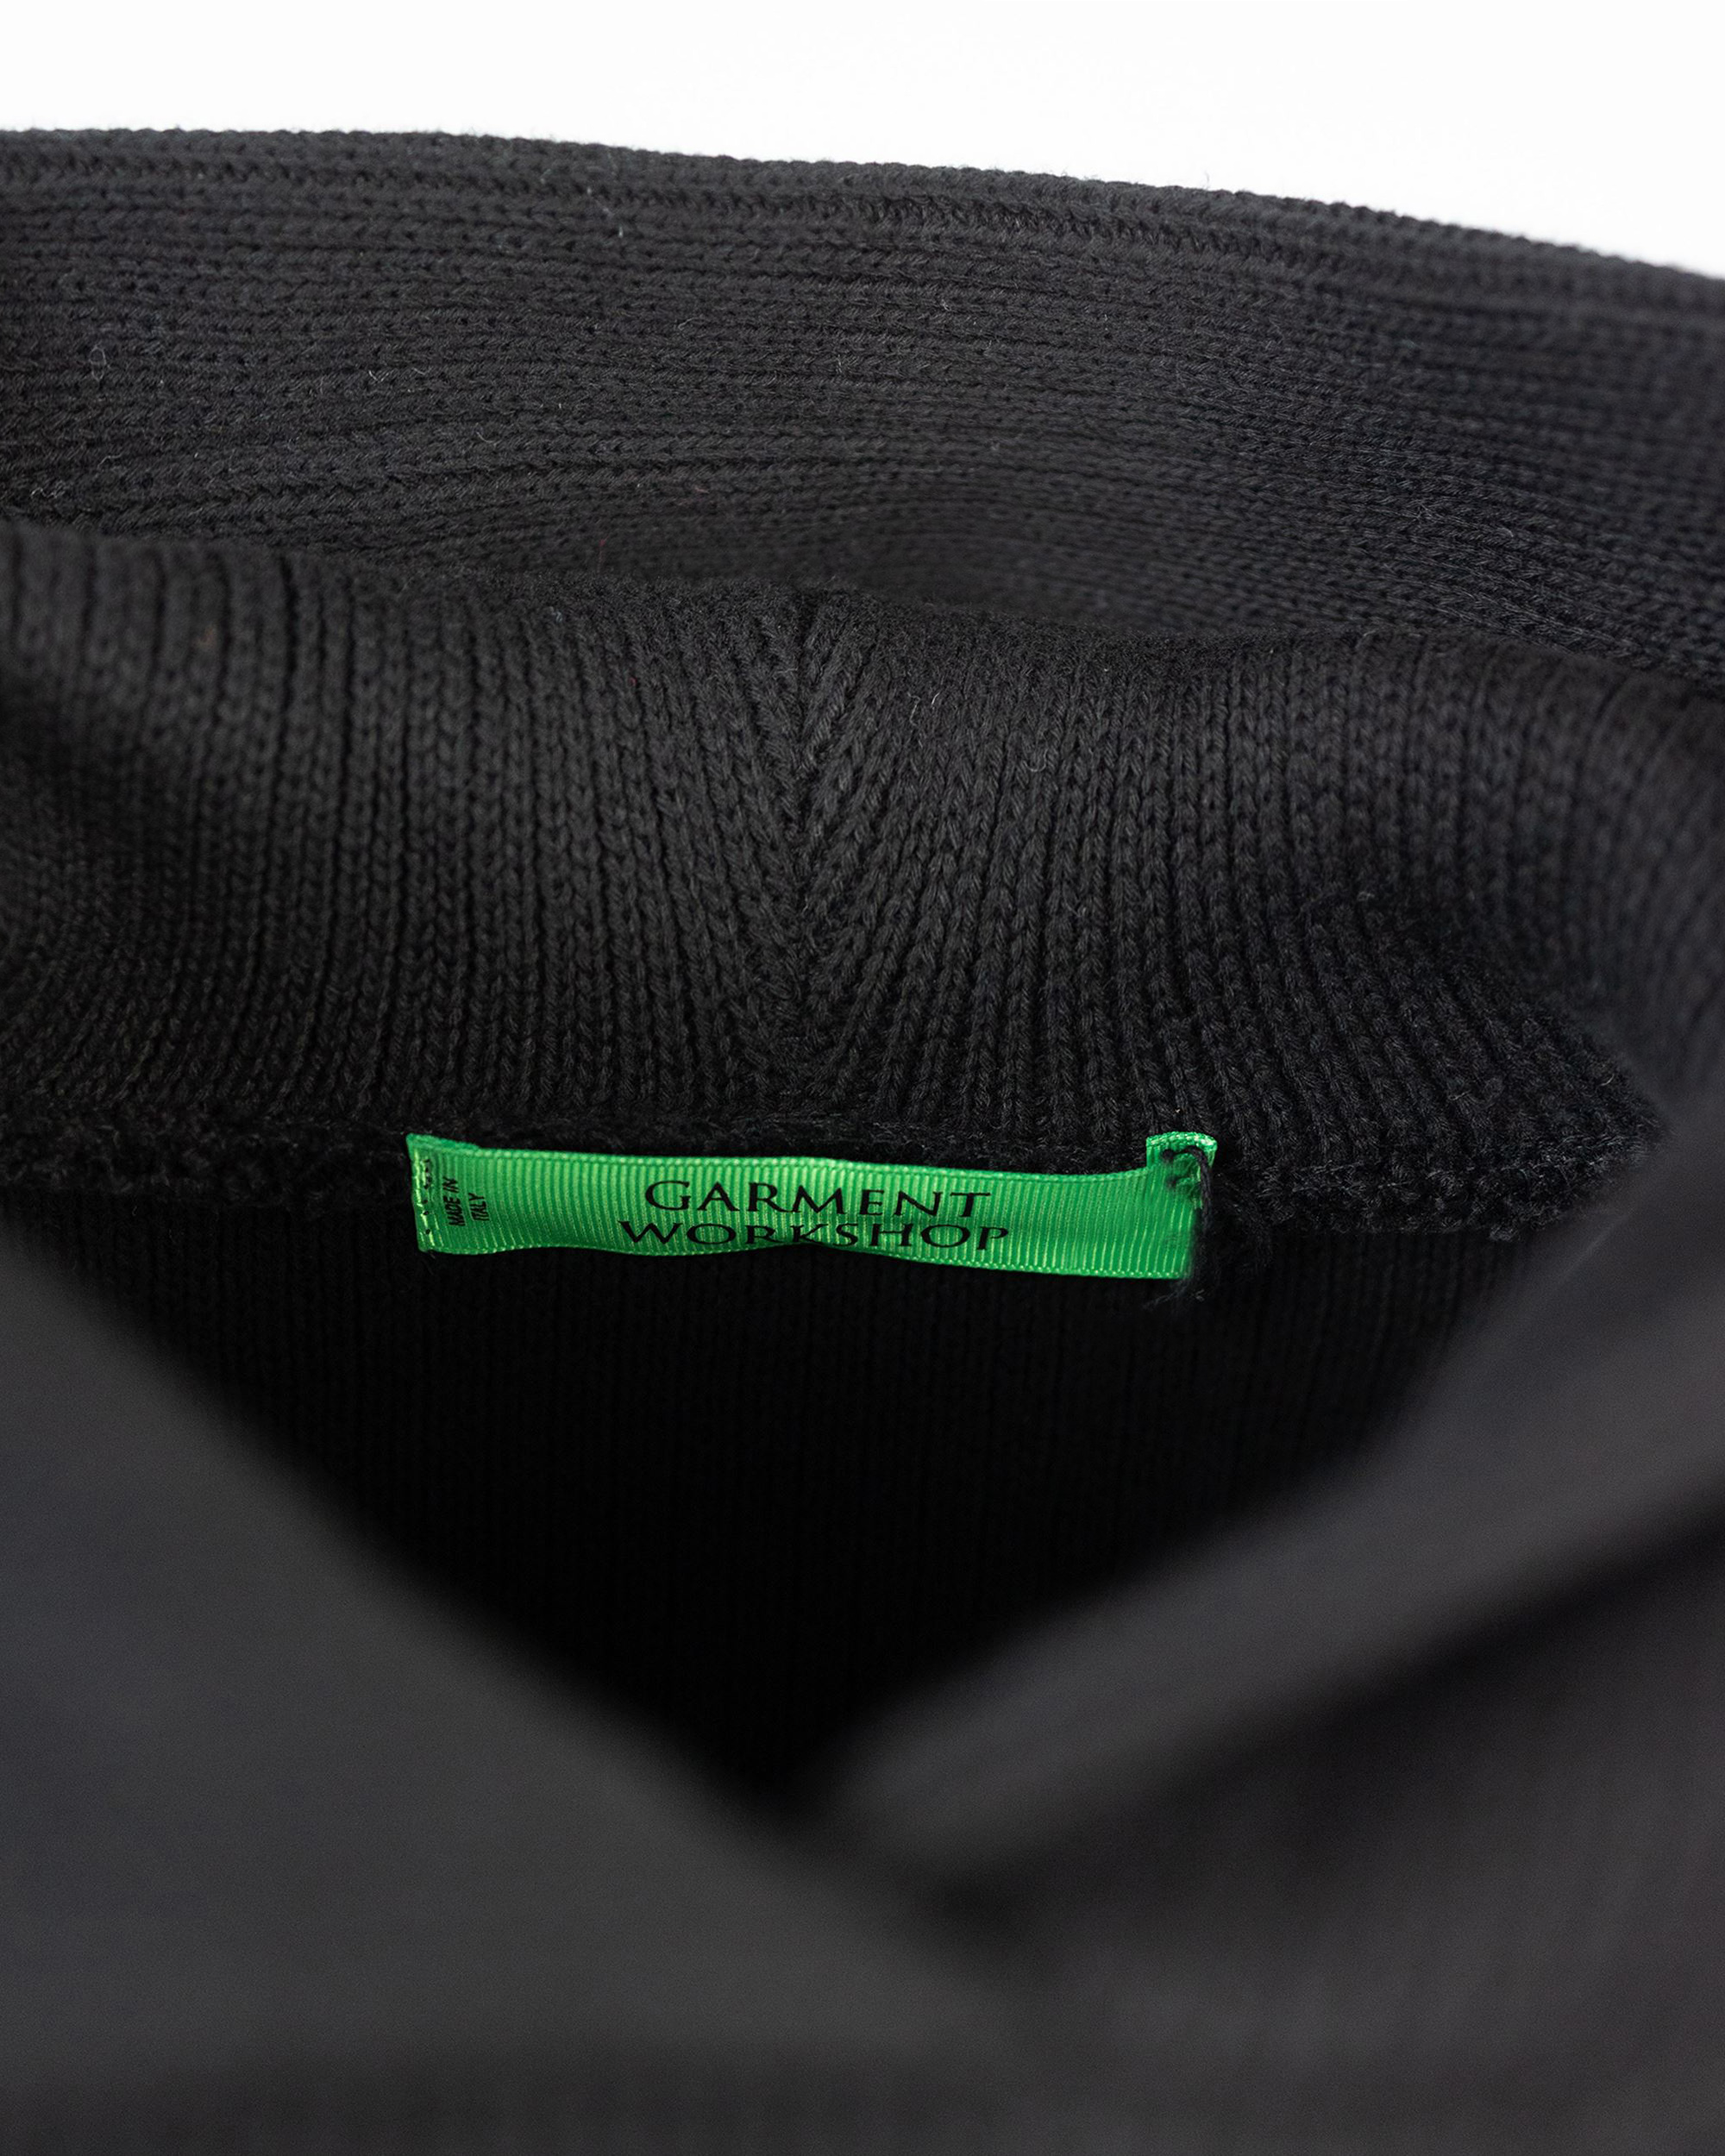 Shop Garment Workshop Caos Sweatshirt In Black Knit In Gw009chaos Black